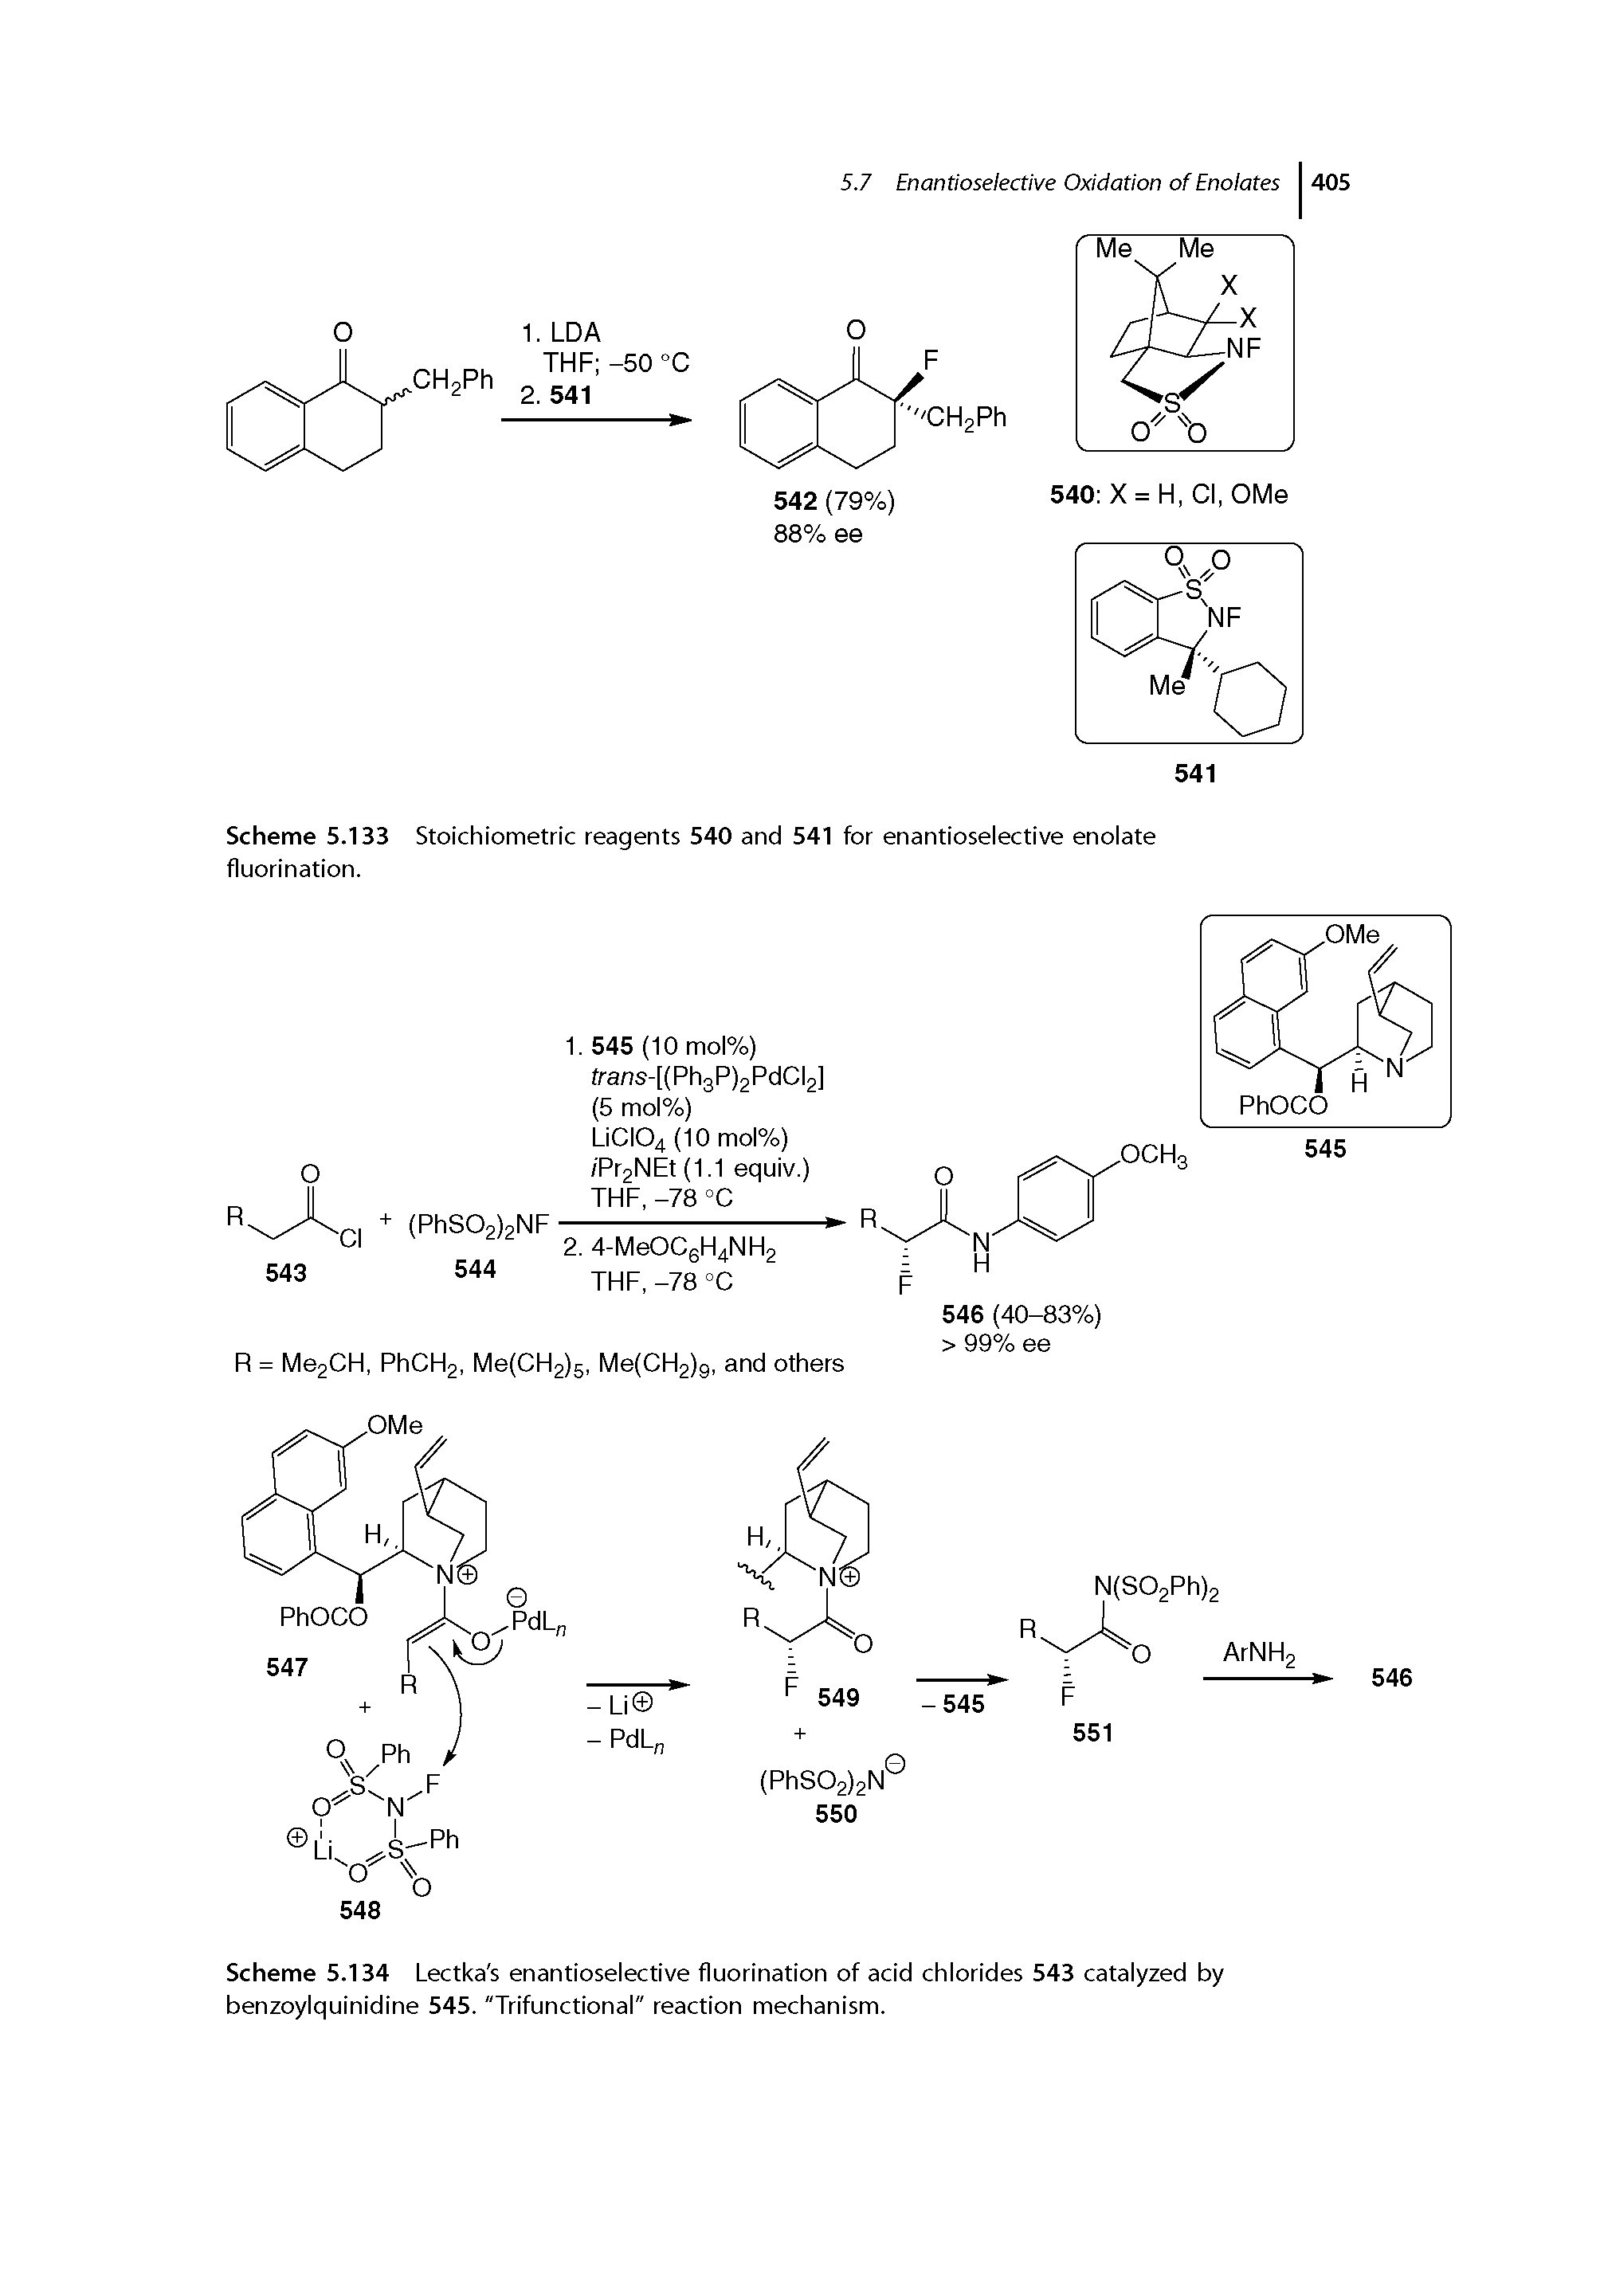 Scheme 5.133 Stoichiometric reagents 540 and 541 for enantioselective enolate fluorination.